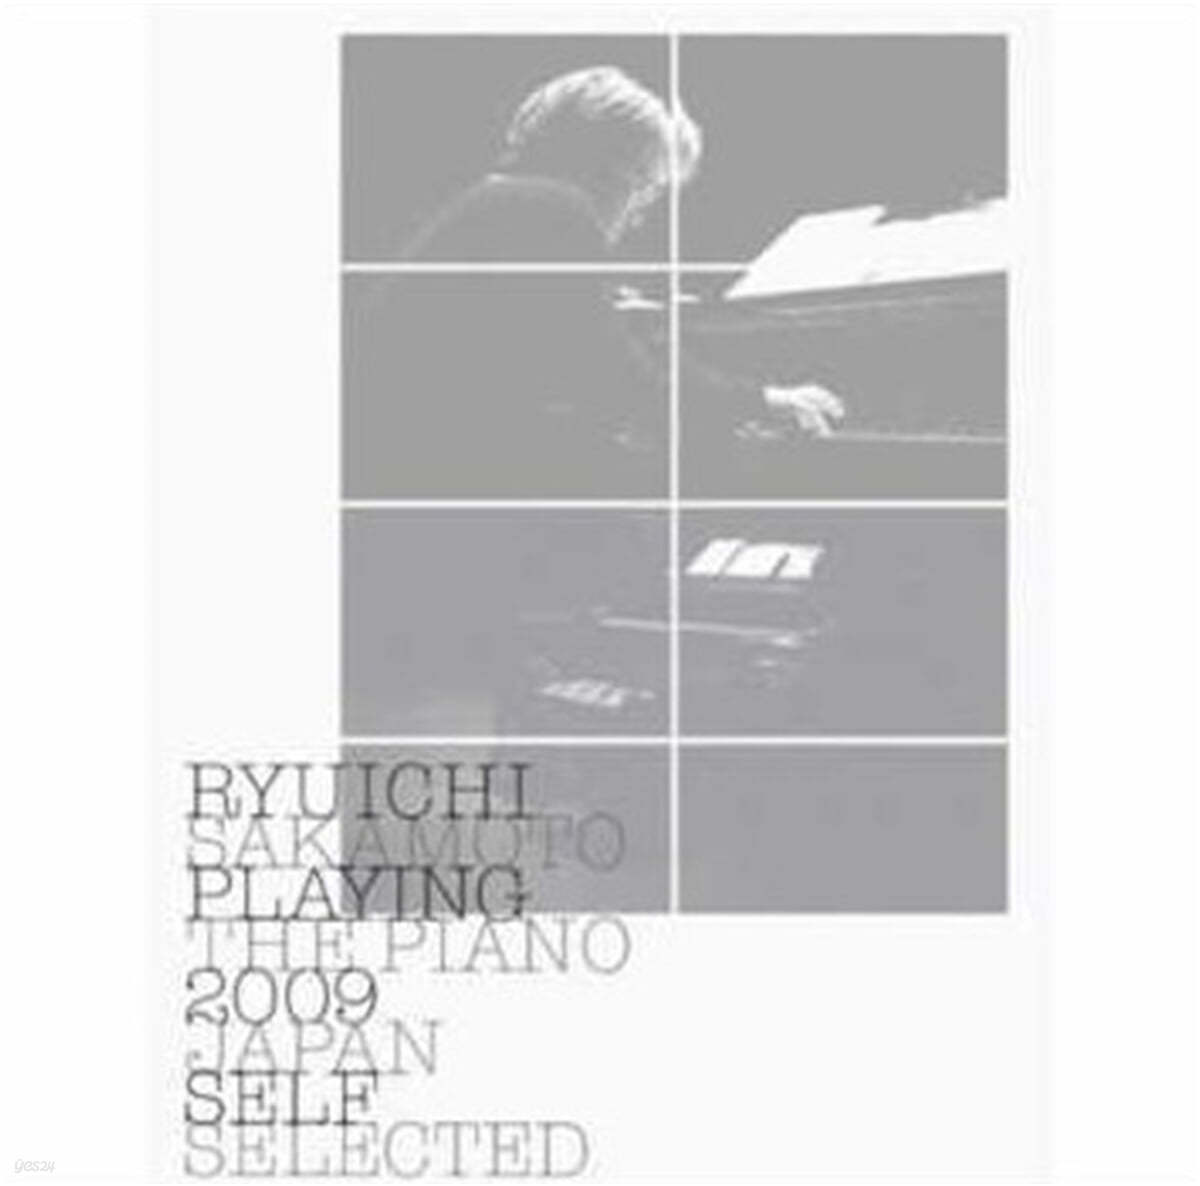 Ryuichi Sakamoto (류이치 사카모토) - Playing The Piano 2009 Japan : SELF SELECTED